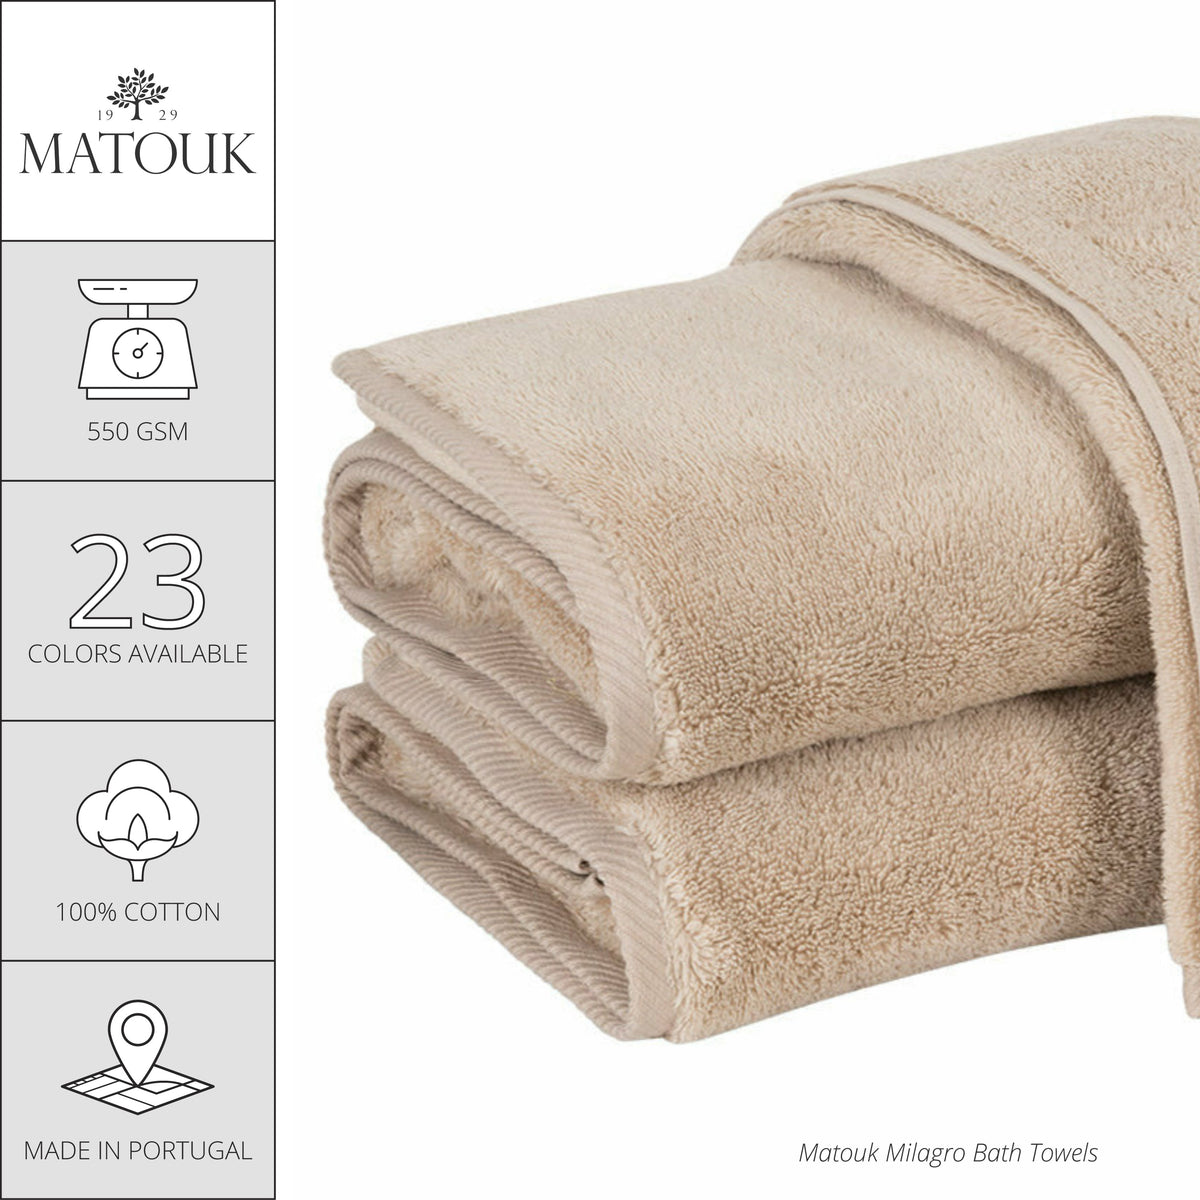 Matouk Milagro Bath Towels and Mats - White